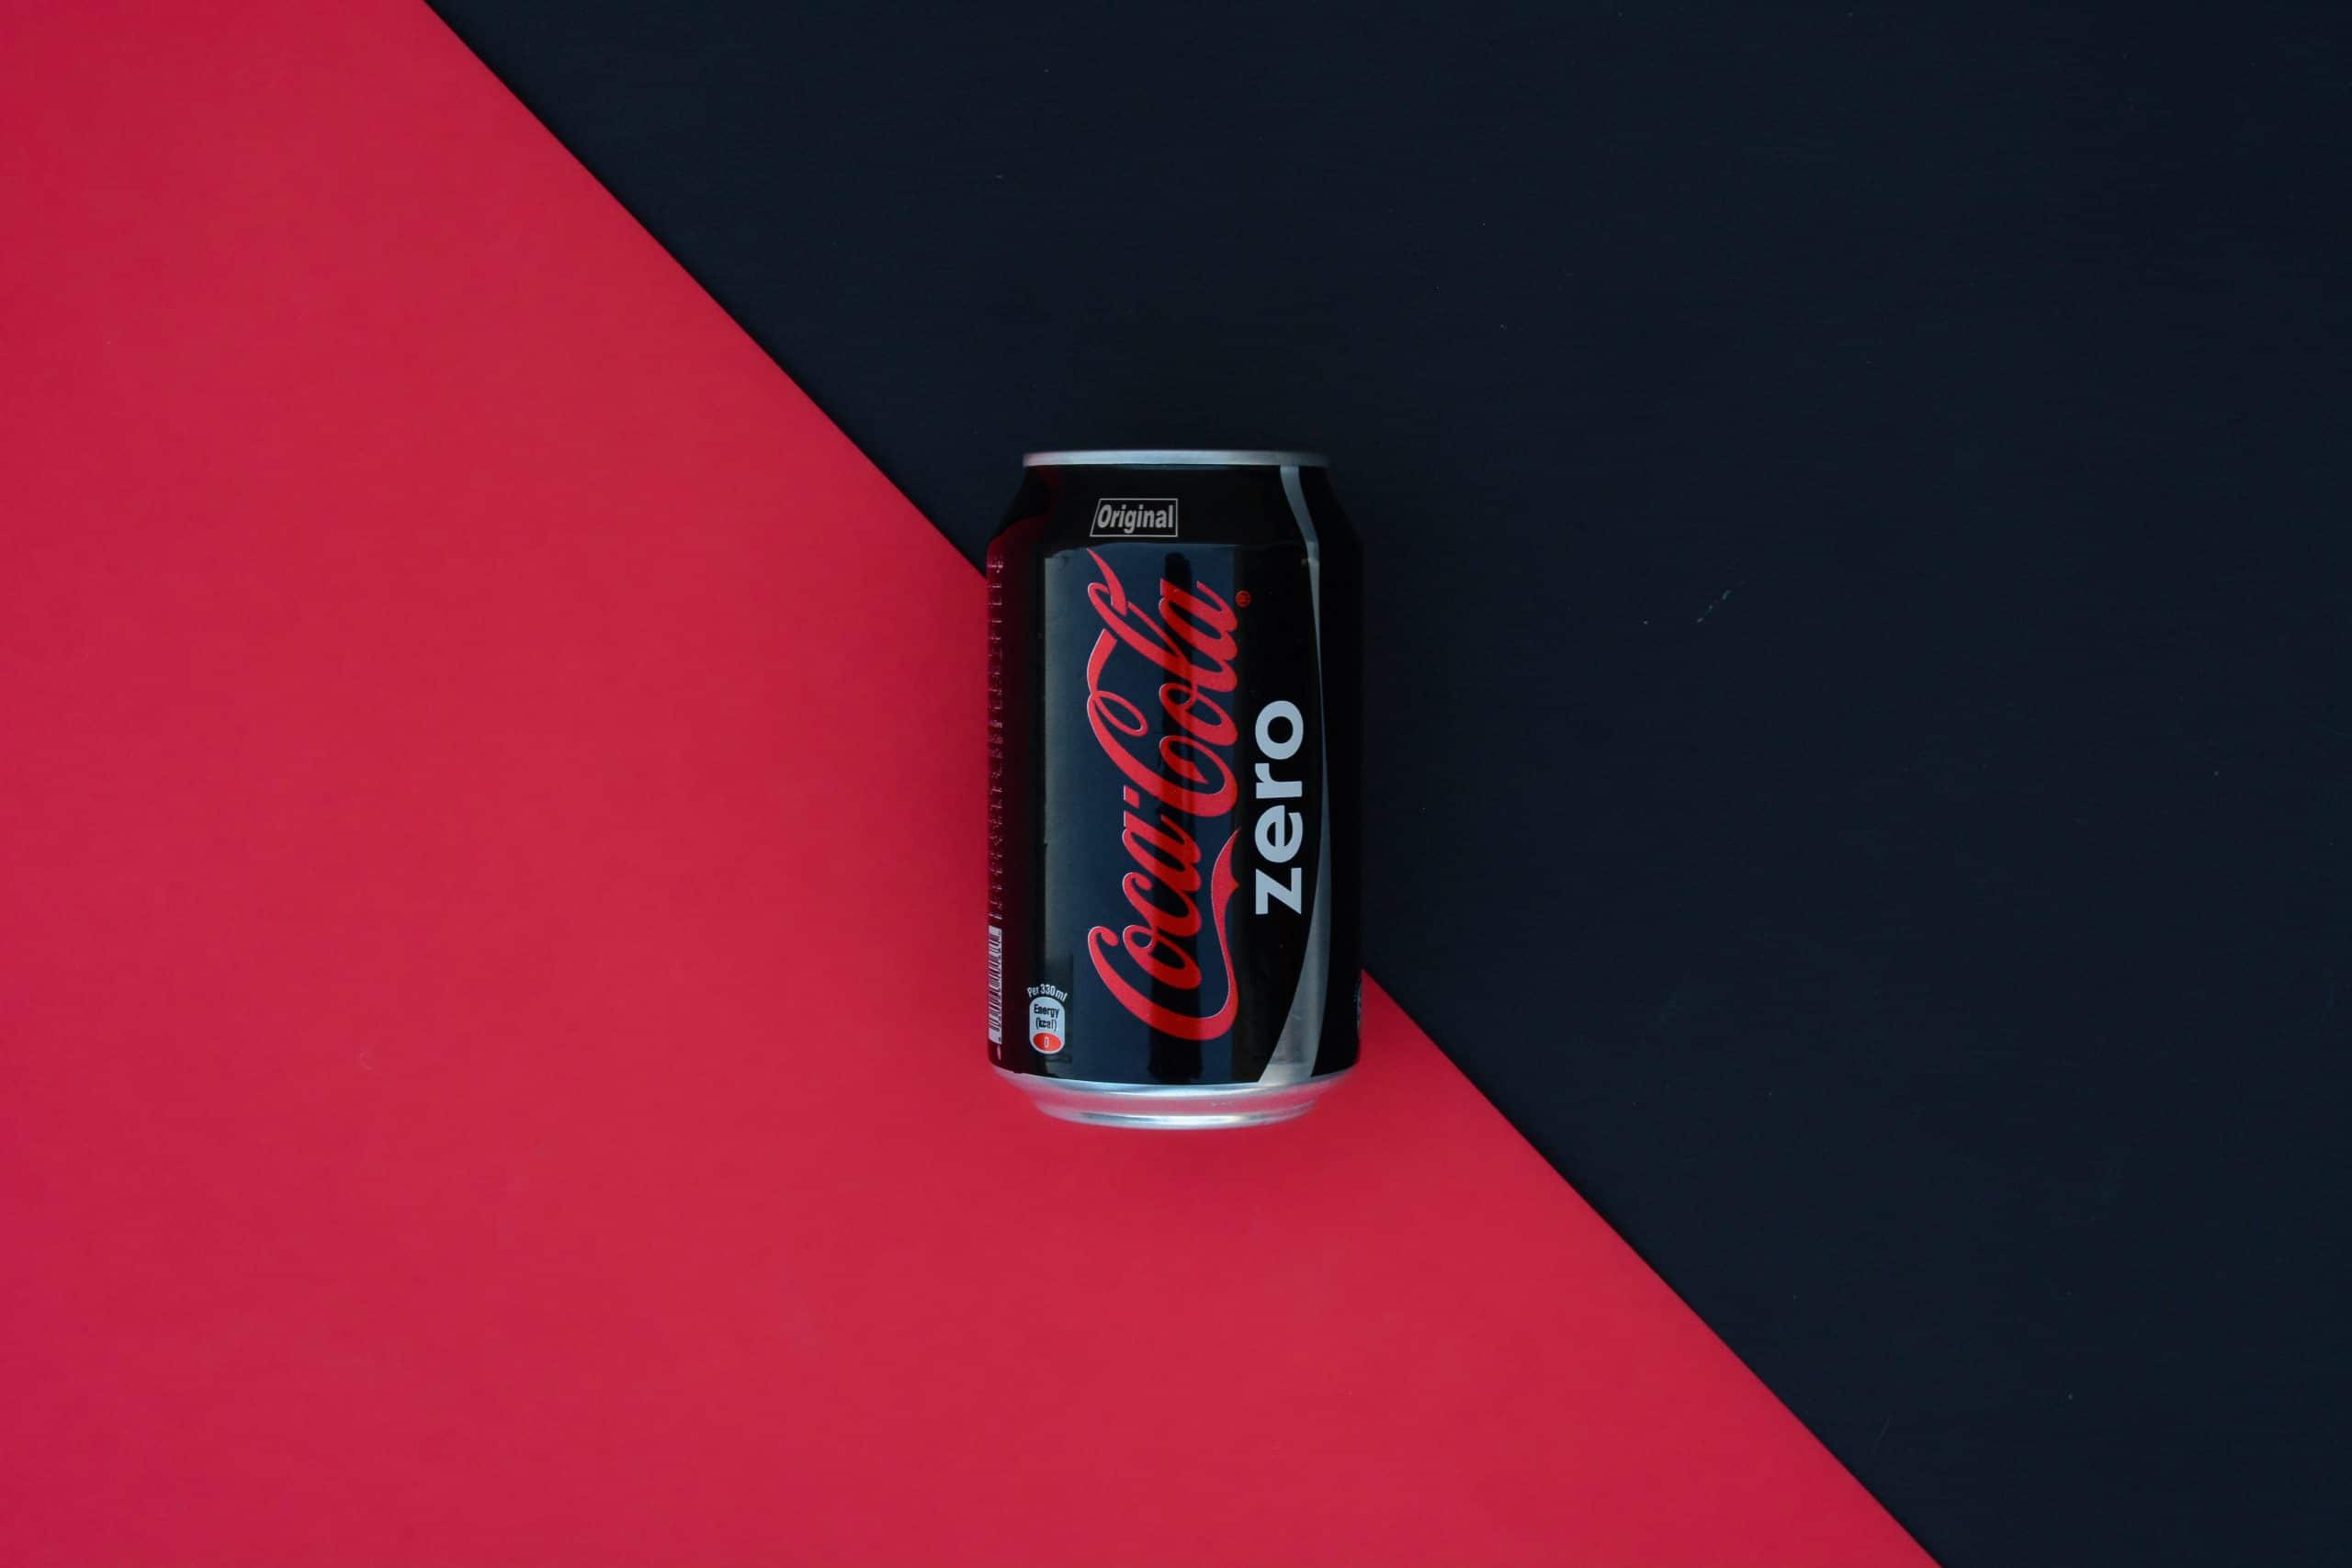 Coca cola - How to do retail Photography